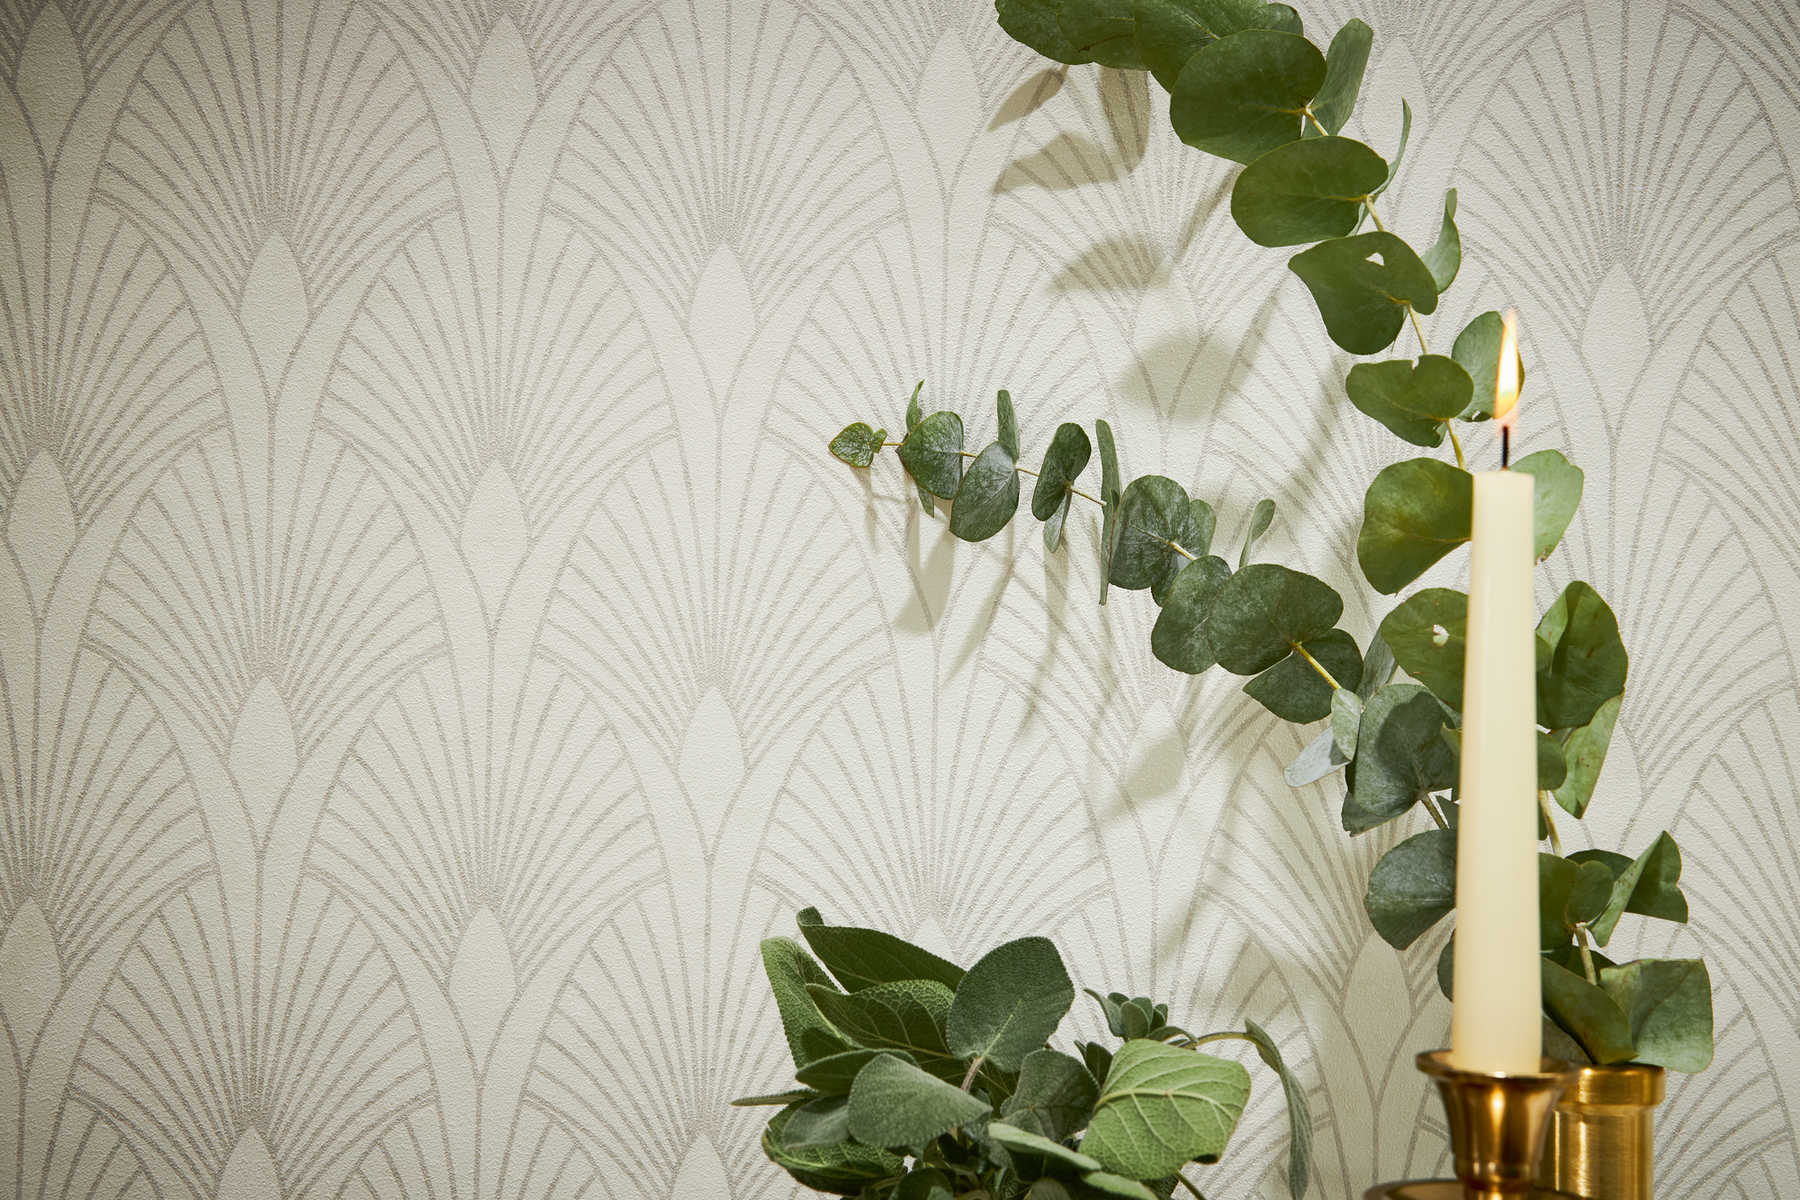             Art deco wallpaper in glamour look - cream, gold, white
        